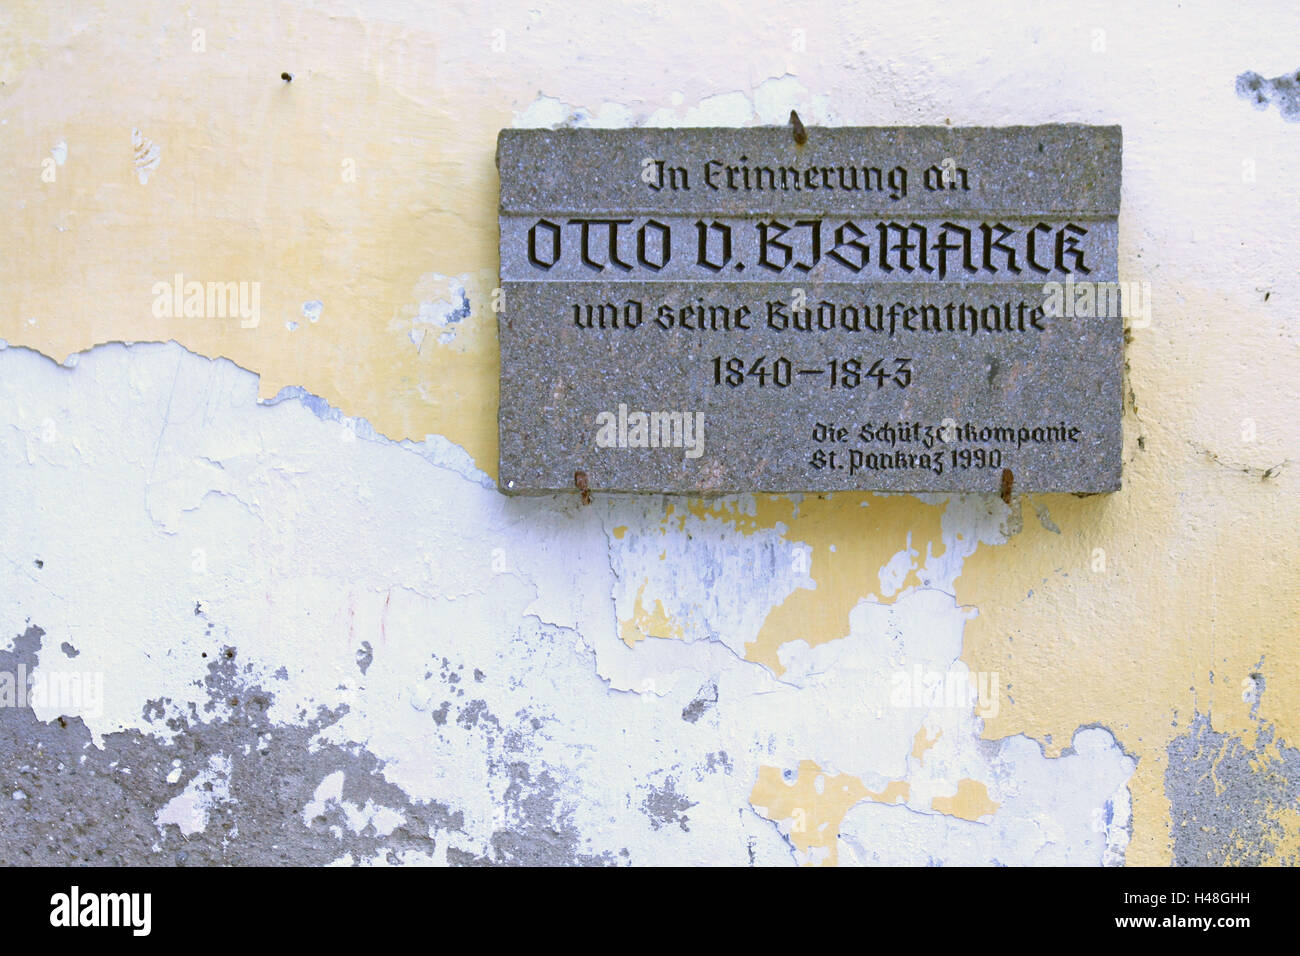 Commemorative table to Otto von Bismarck, Stock Photo